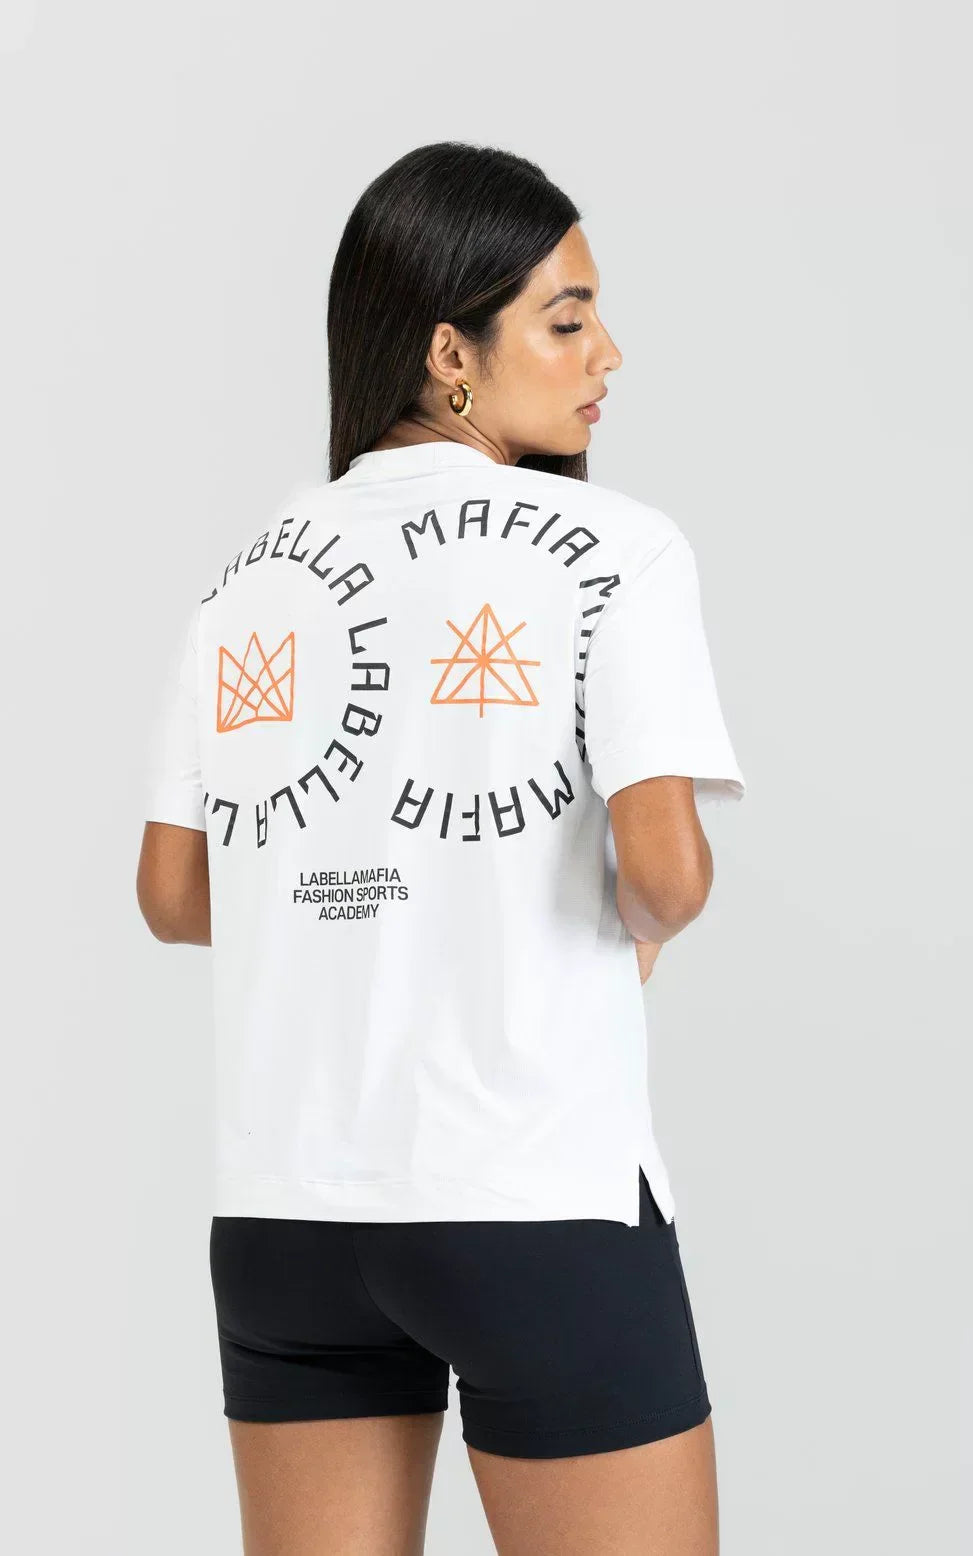 Camiseta Malha Movement 30602